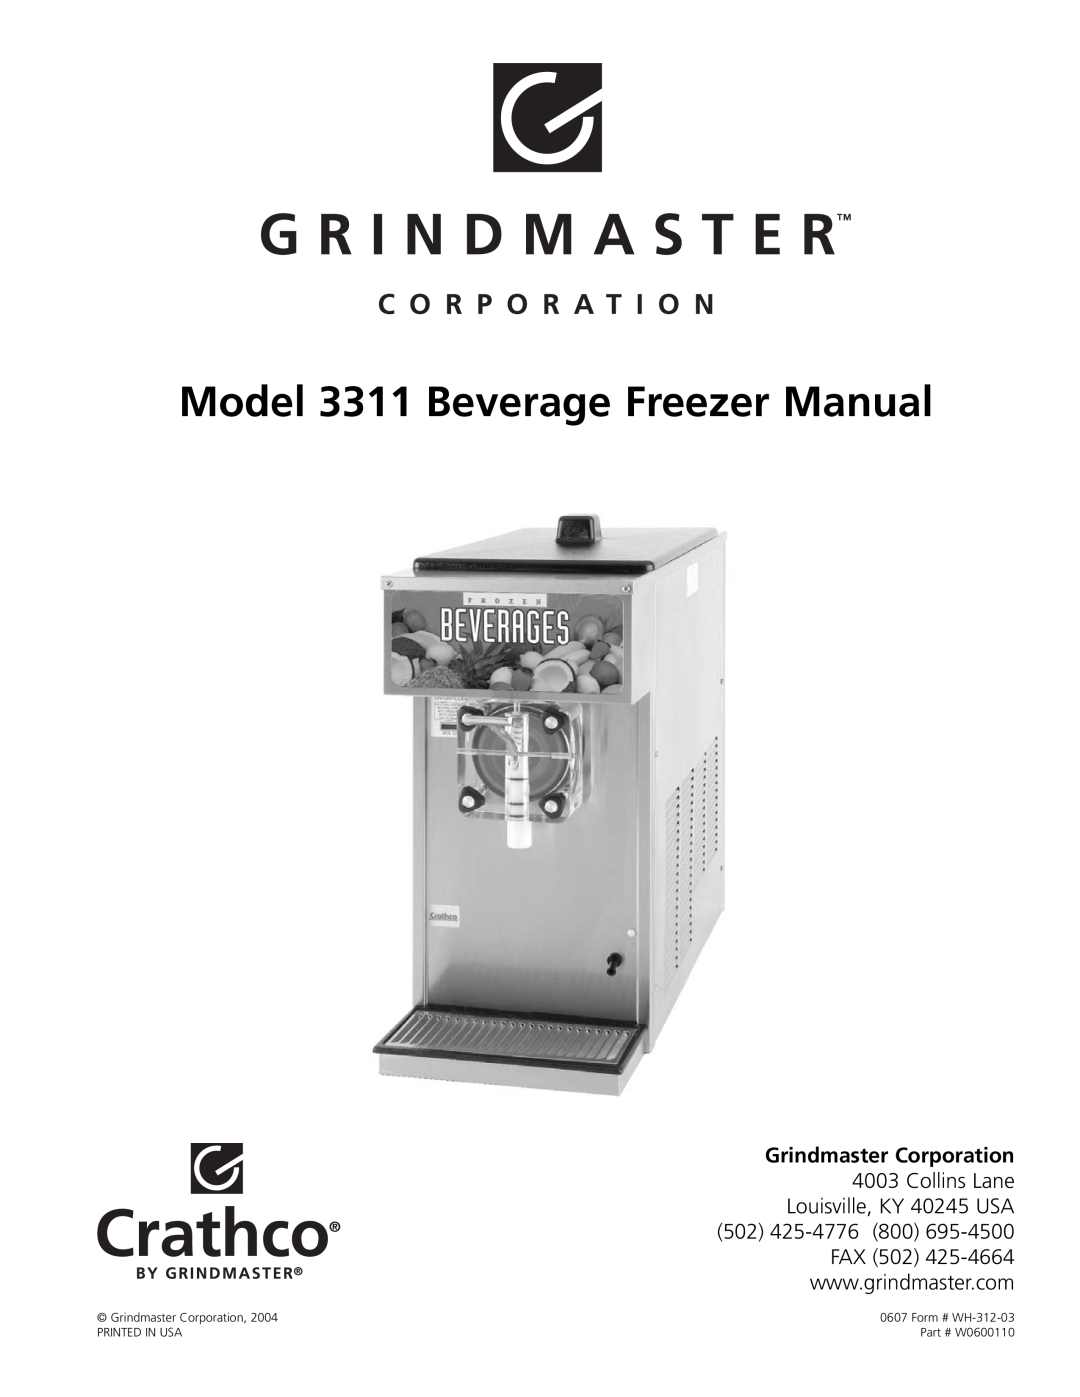 Grindmaster manual Model 3311 Beverage Freezer Manual, Grindmaster Corporation, Printed In Usa, W0600110 